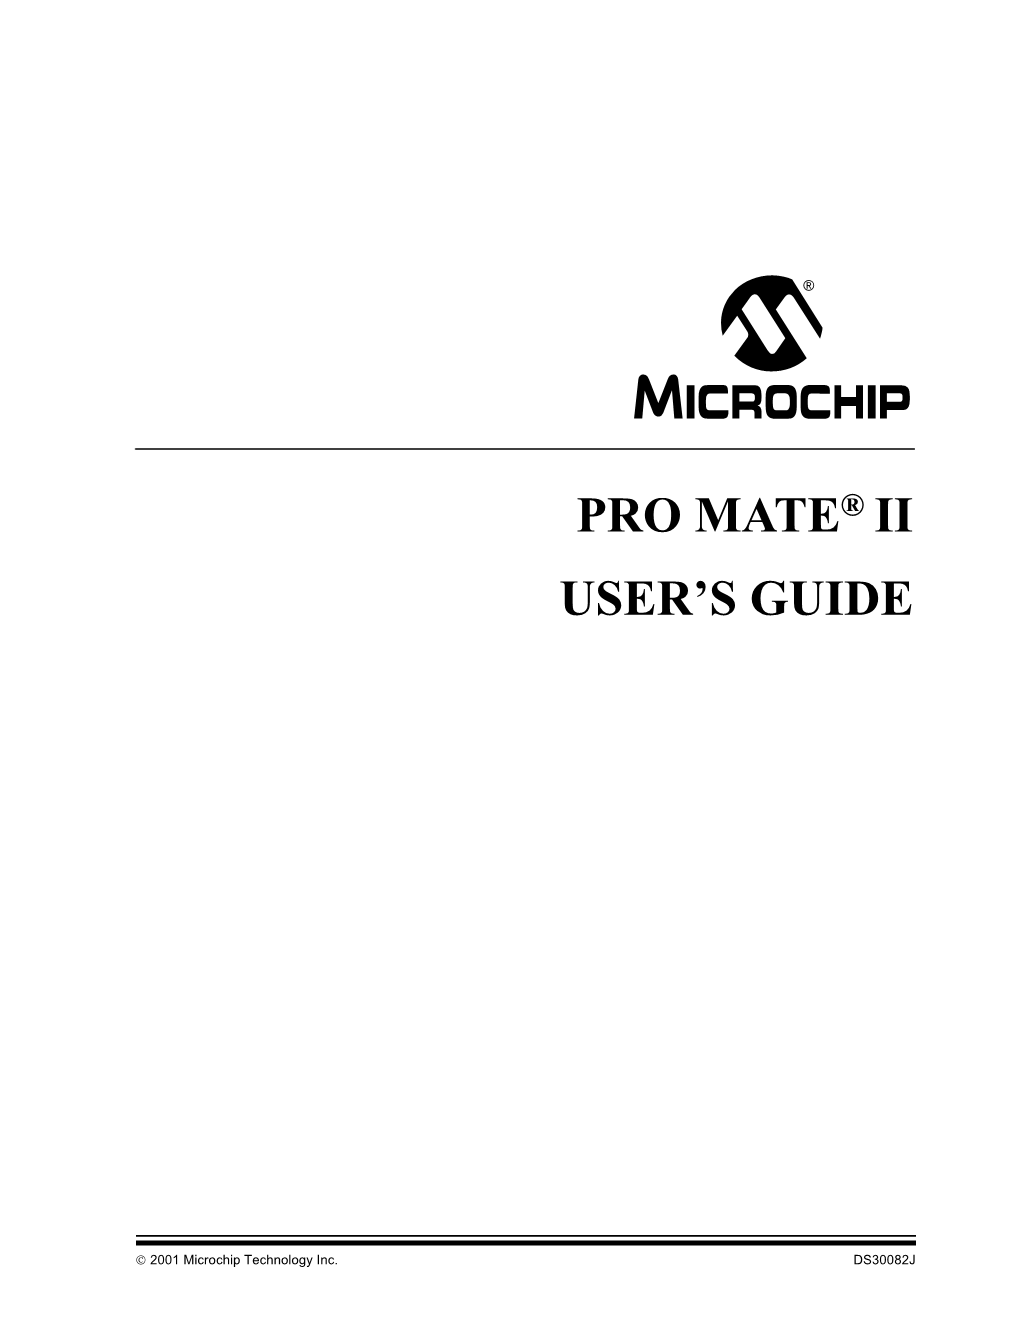 PRO MATE II User's Guide